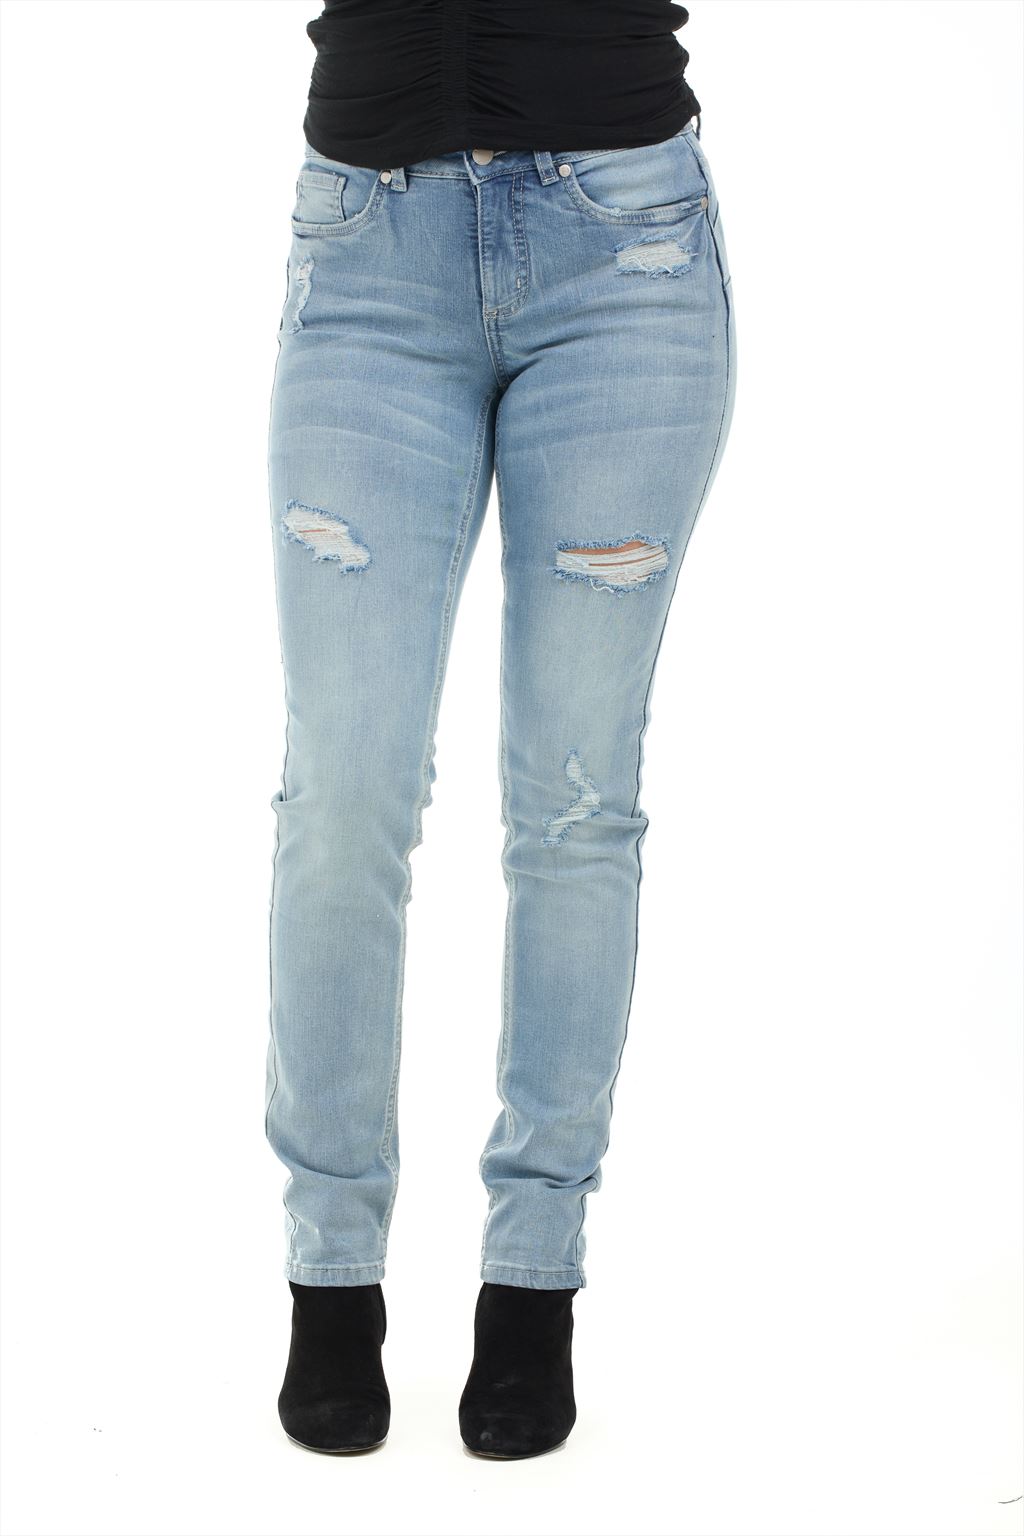 Joy jeans with narrow legs